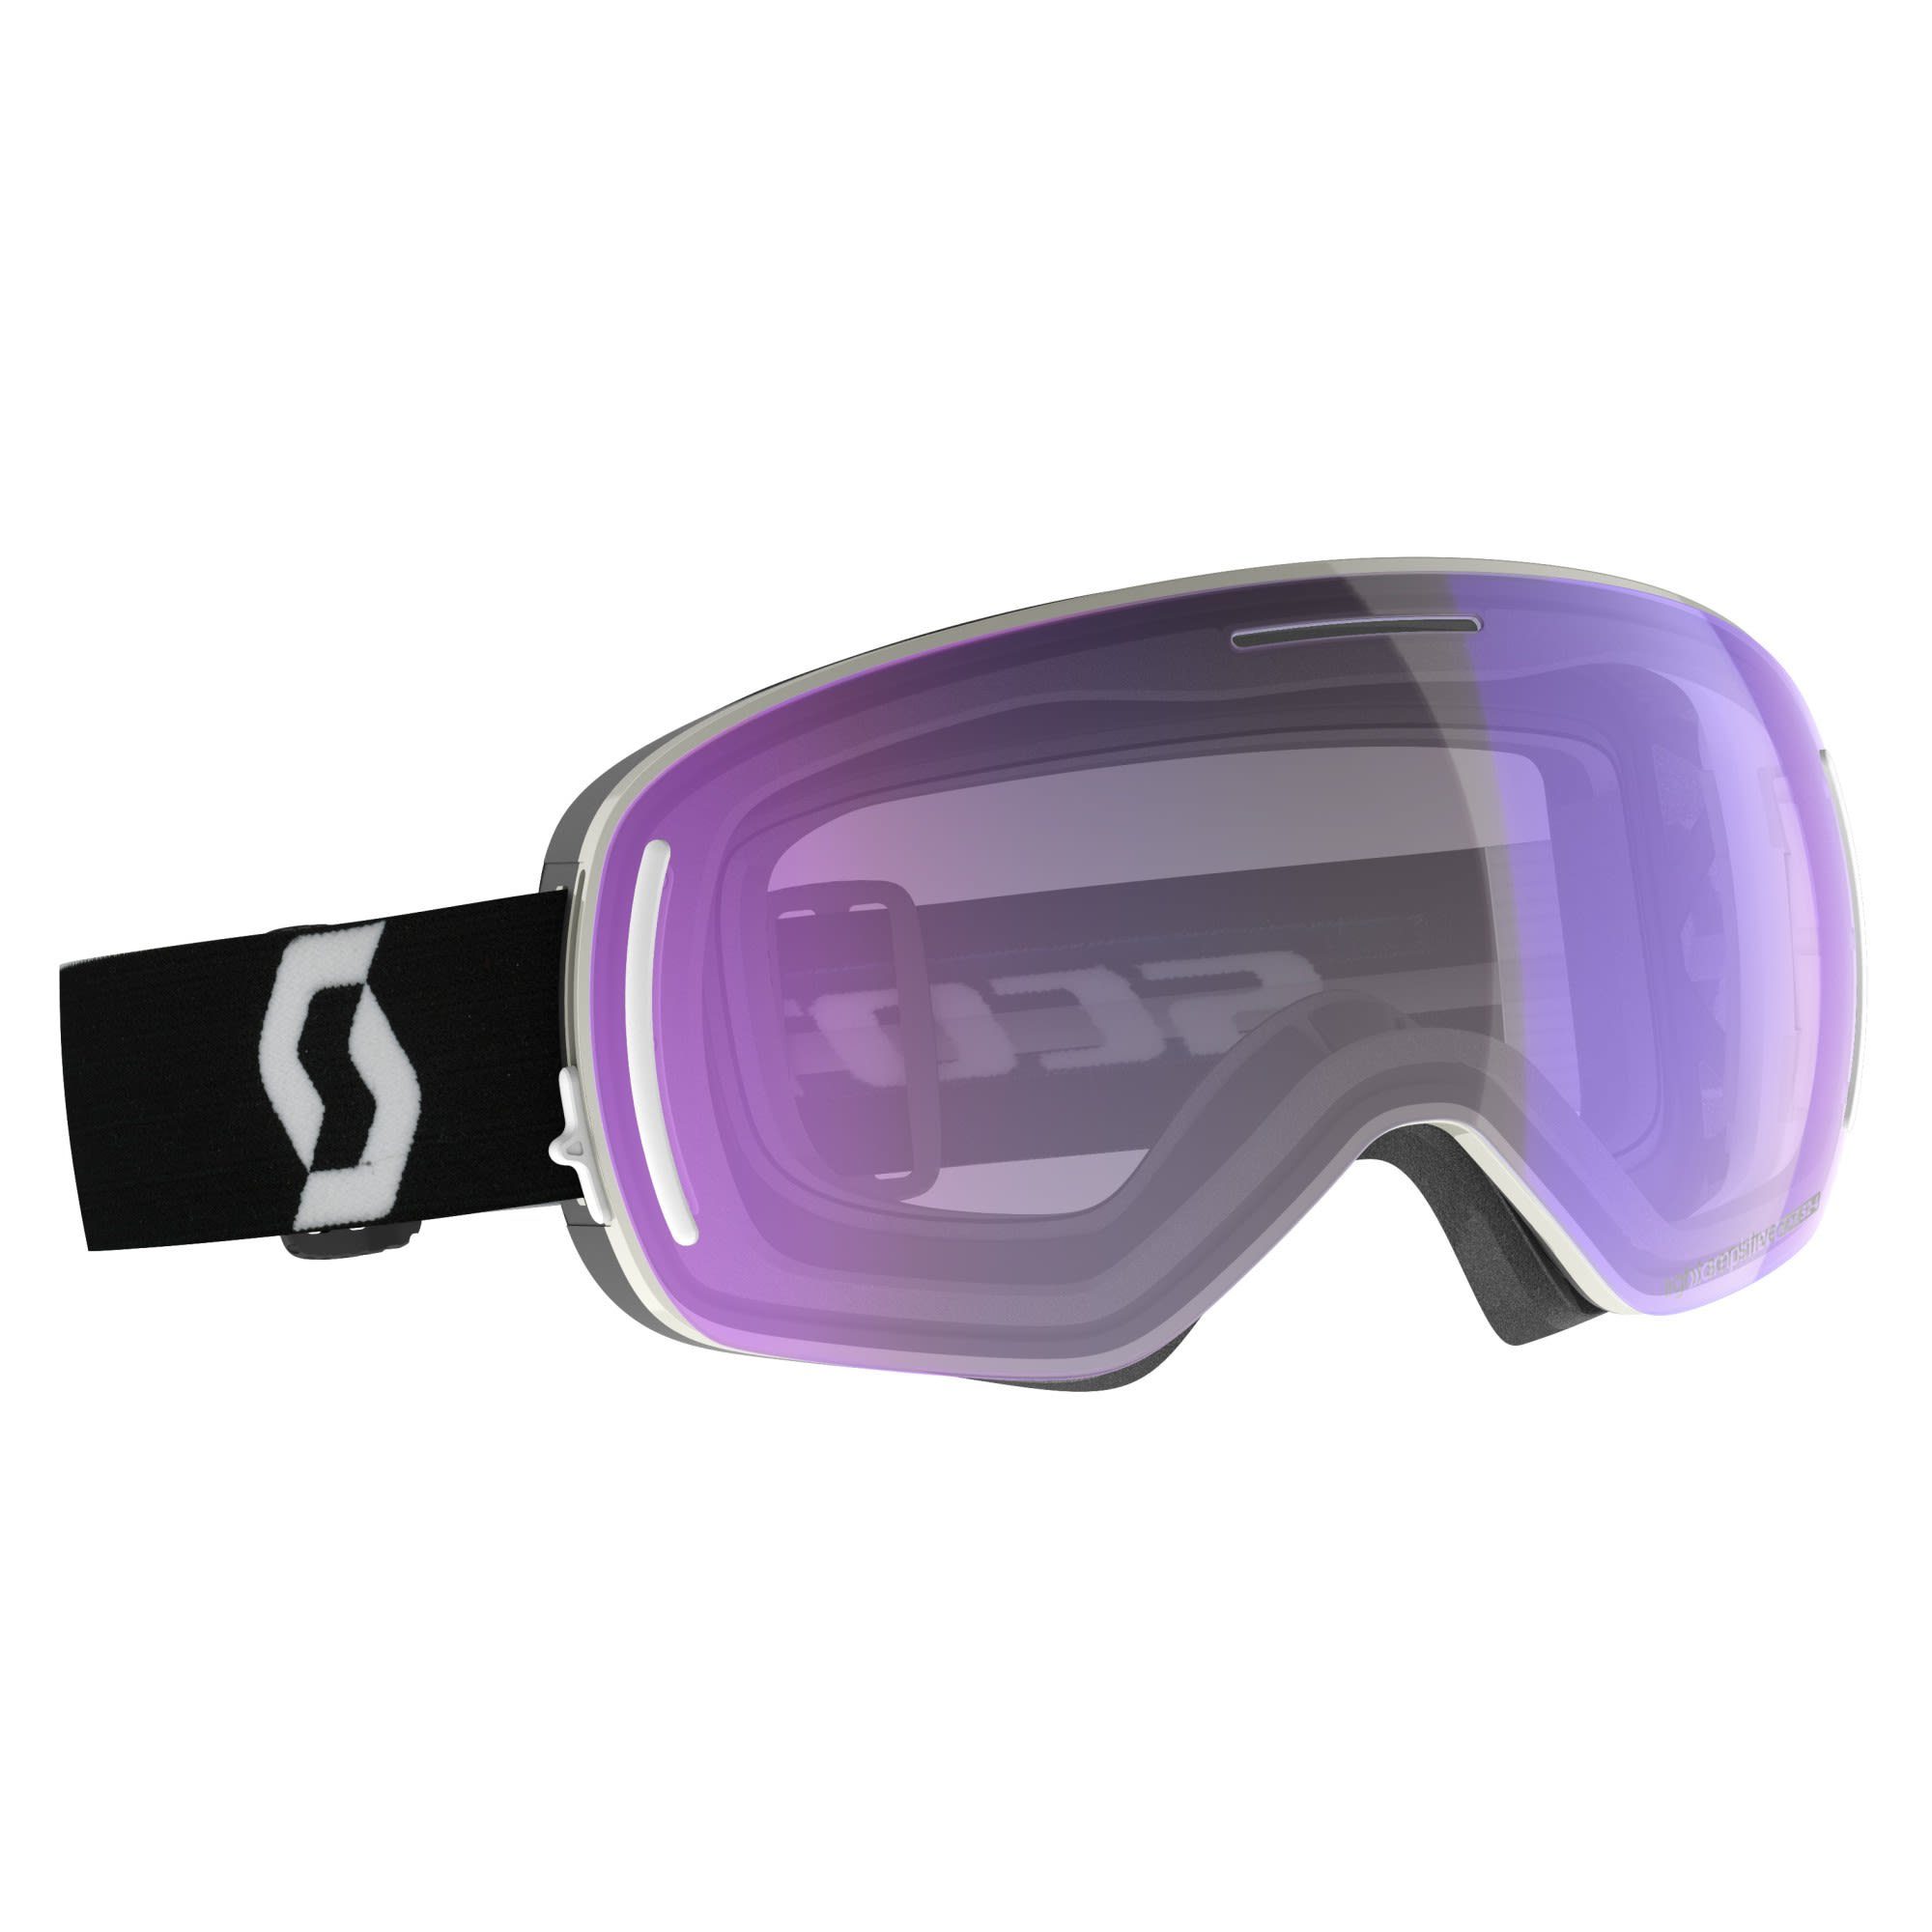 Scott Skibrille Scott Lcg Evo Light Sensitive Goggle Accessoires Team White - Black - Light Sensitive Blue Chrome